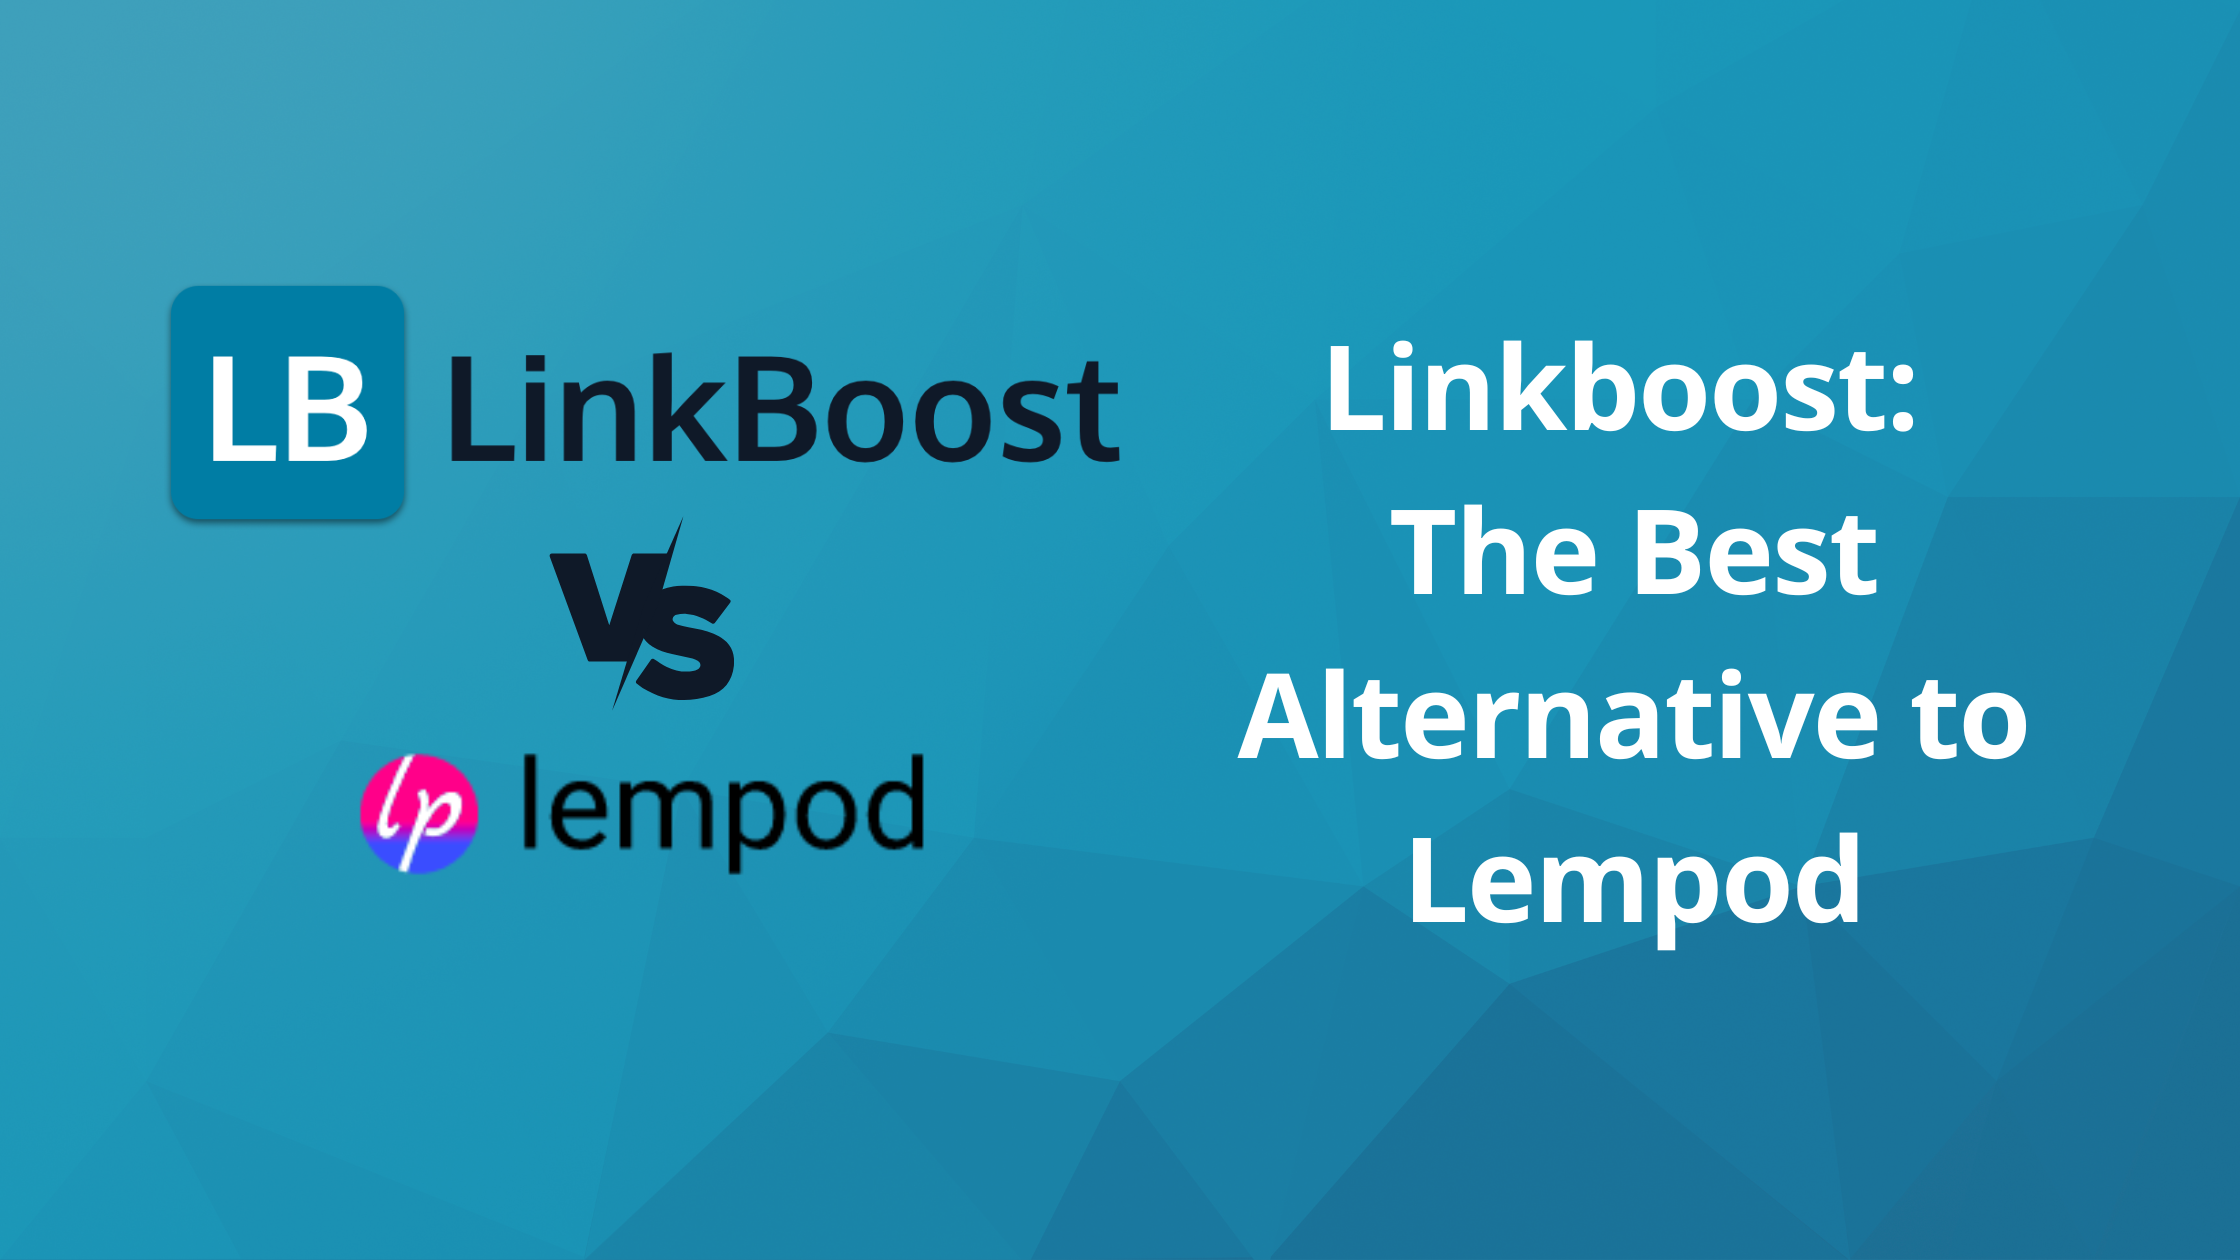 Linkboost: The Best Alternative to Lempod